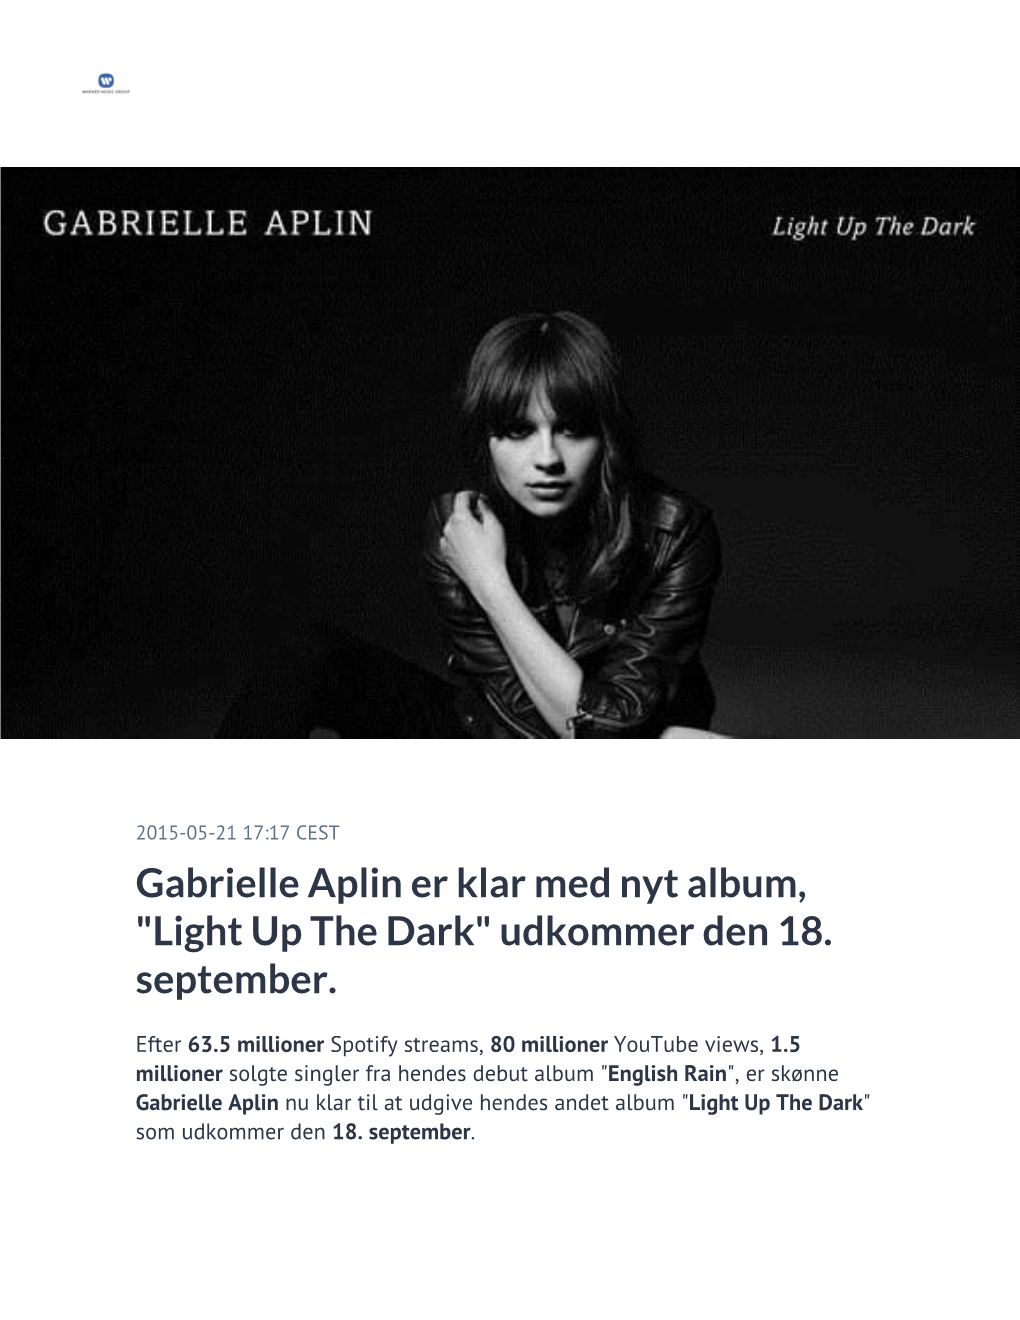 Gabrielle Aplin Er Klar Med Nyt Album, "Light up the Dark" Udkommer Den 18